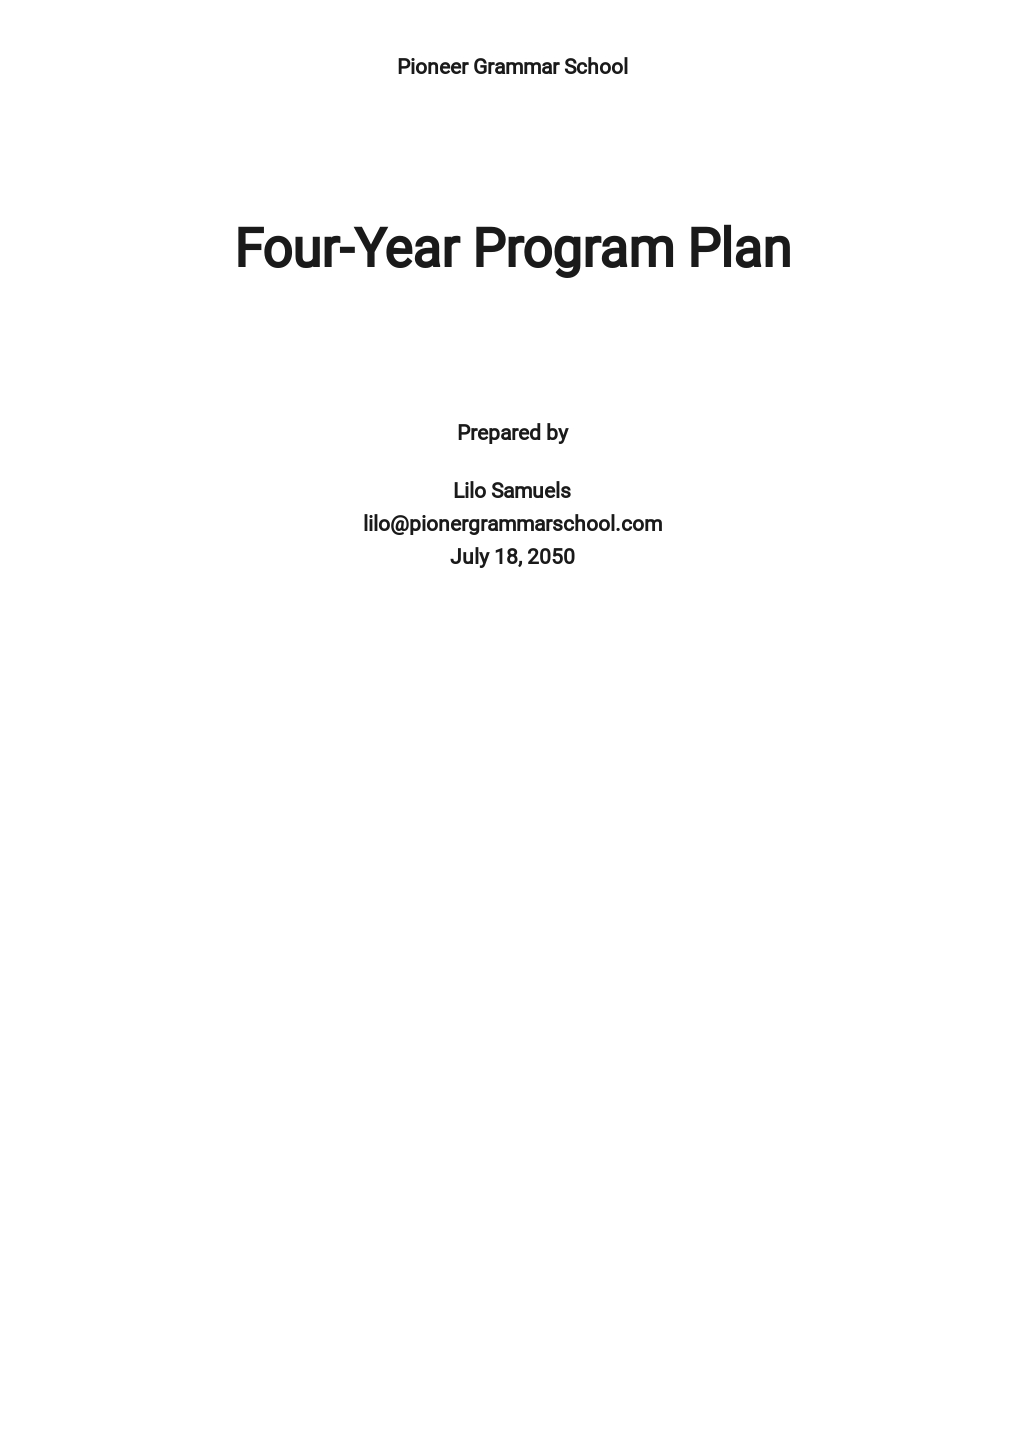 Four Year Program Plan Template.jpe